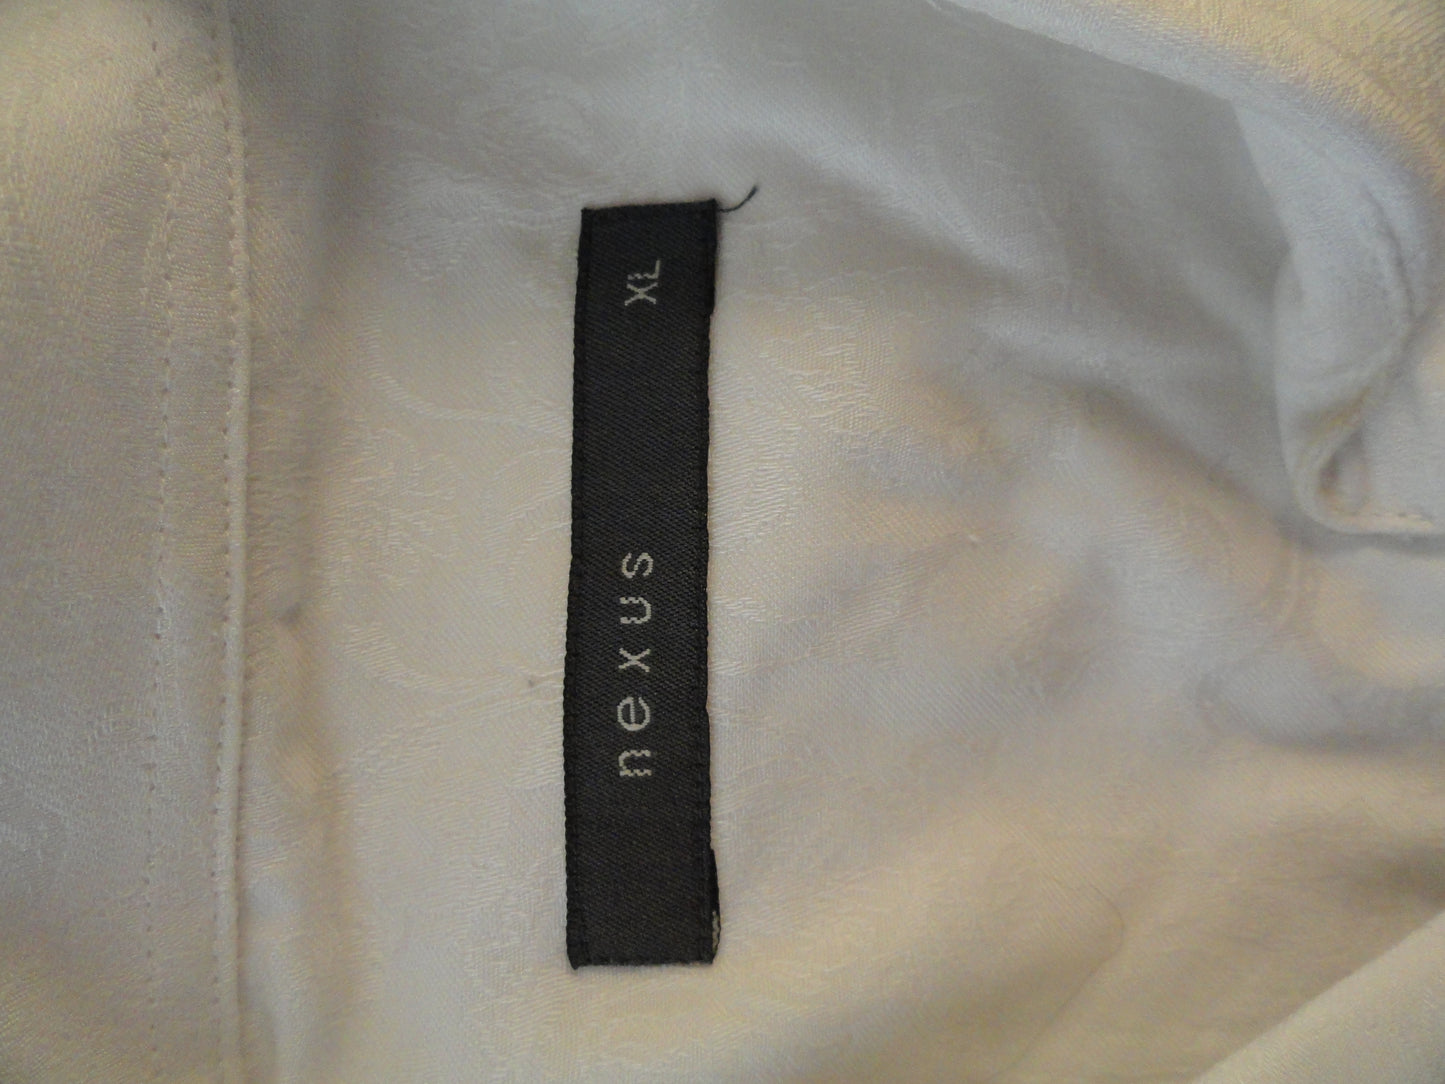 Load image into Gallery viewer, Nexus White Long Sleeve Dress Shirt XL SKU 000166
